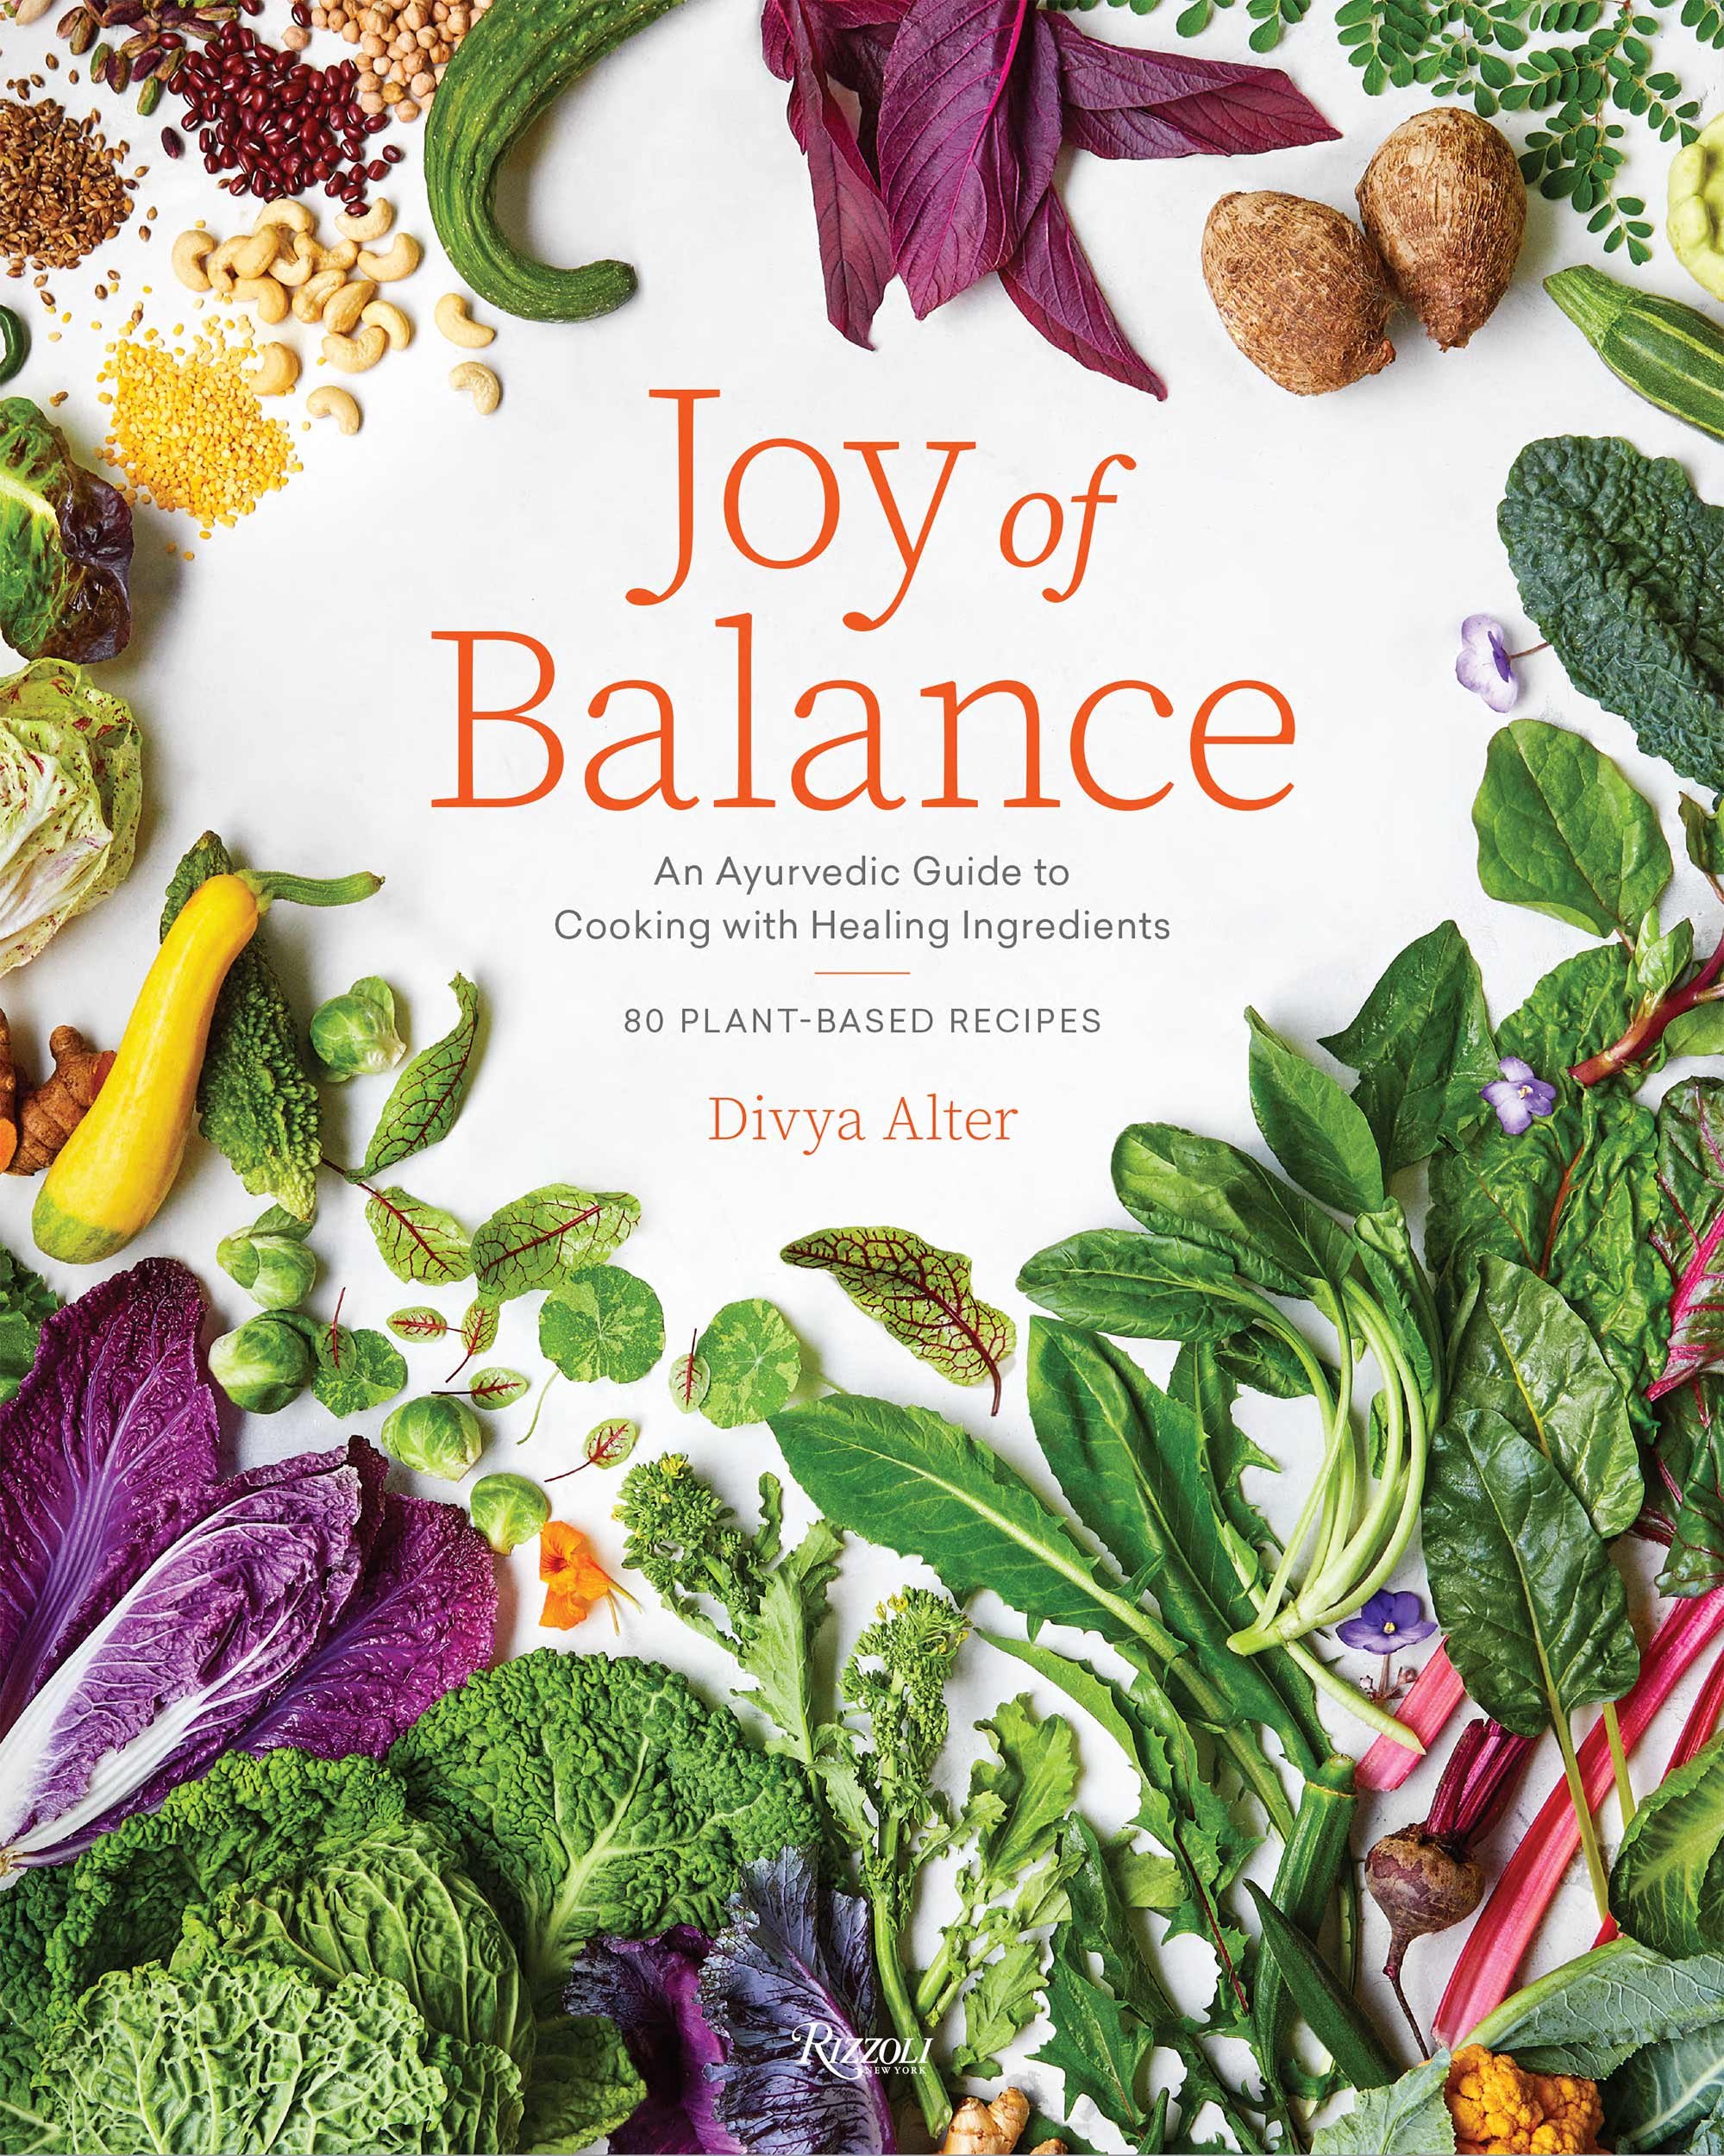 nyc-nj-food-cookbook-photographer-joy-of-balance-divya-alter-cover.jpg